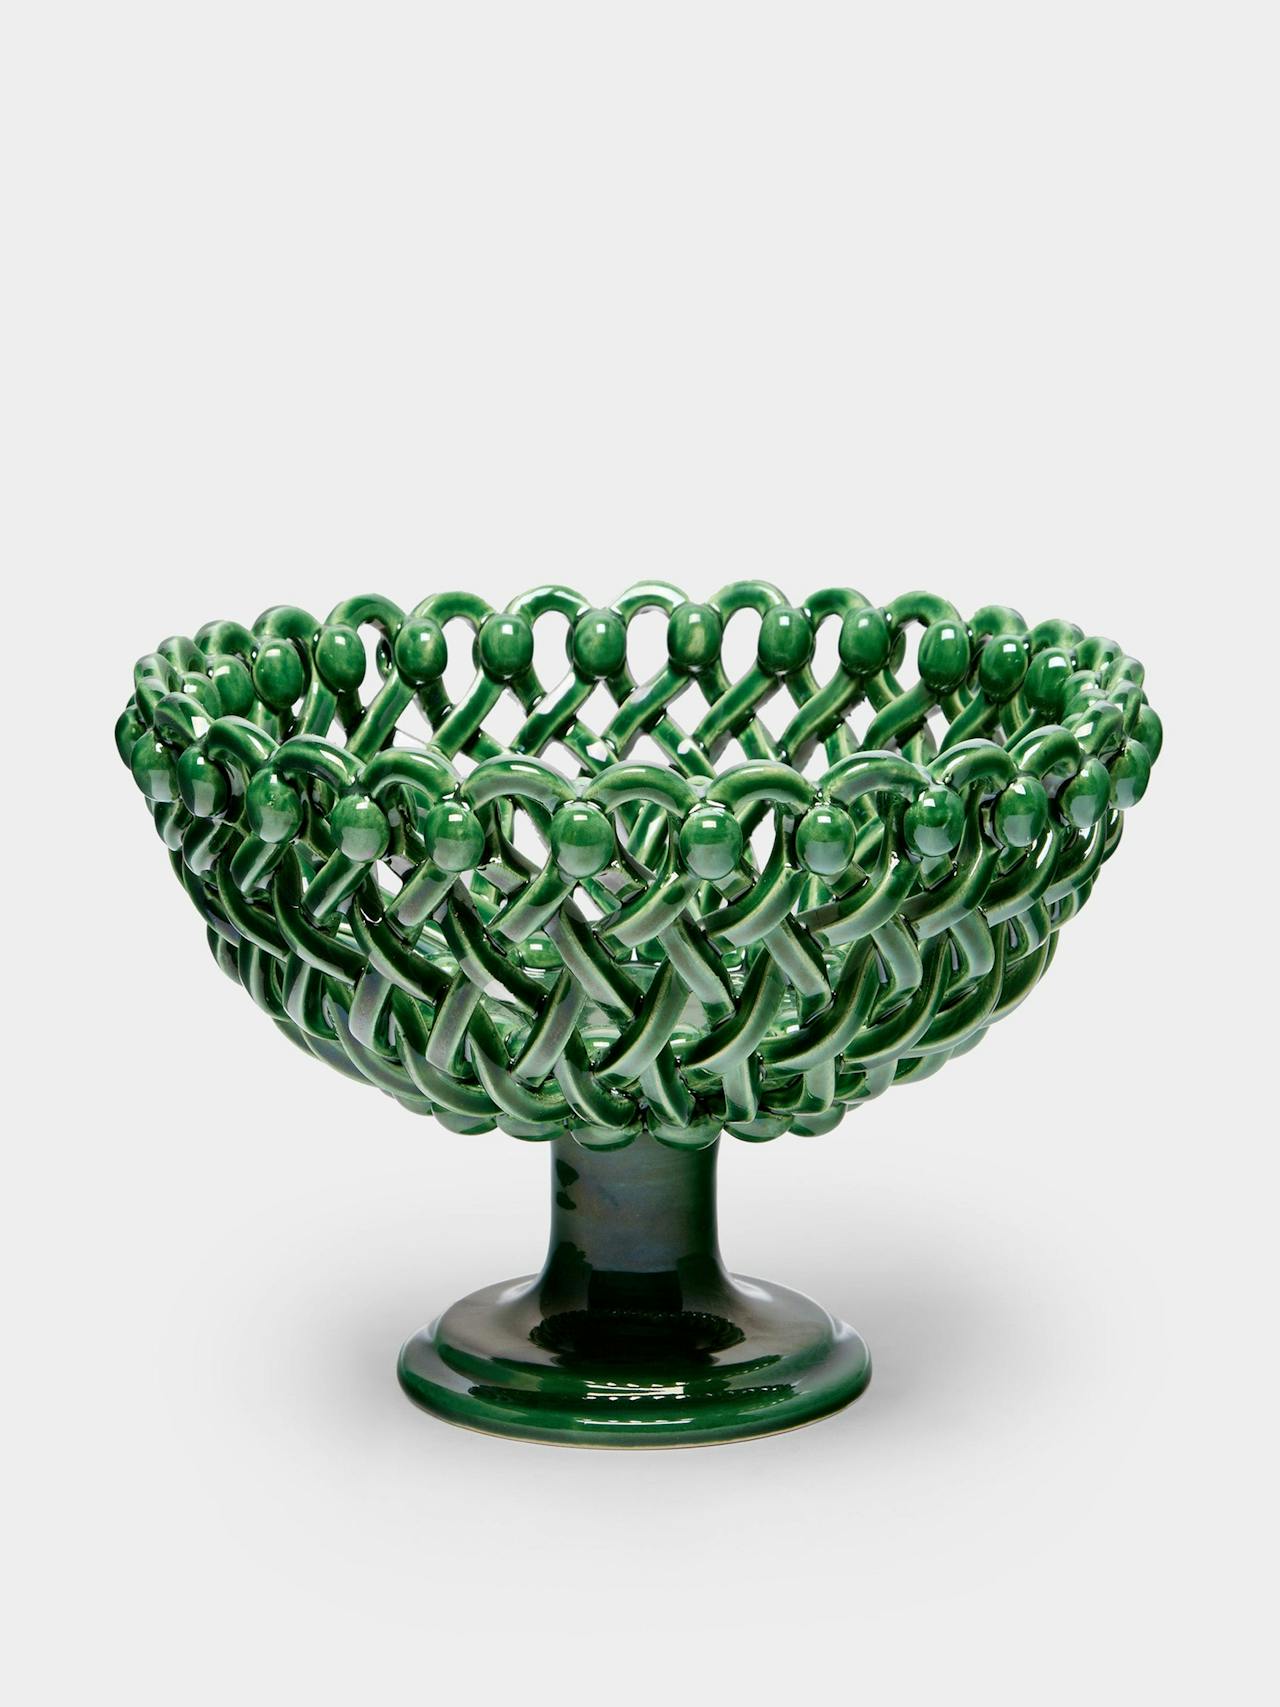 Hand-glazed ceramic braided raised bowl